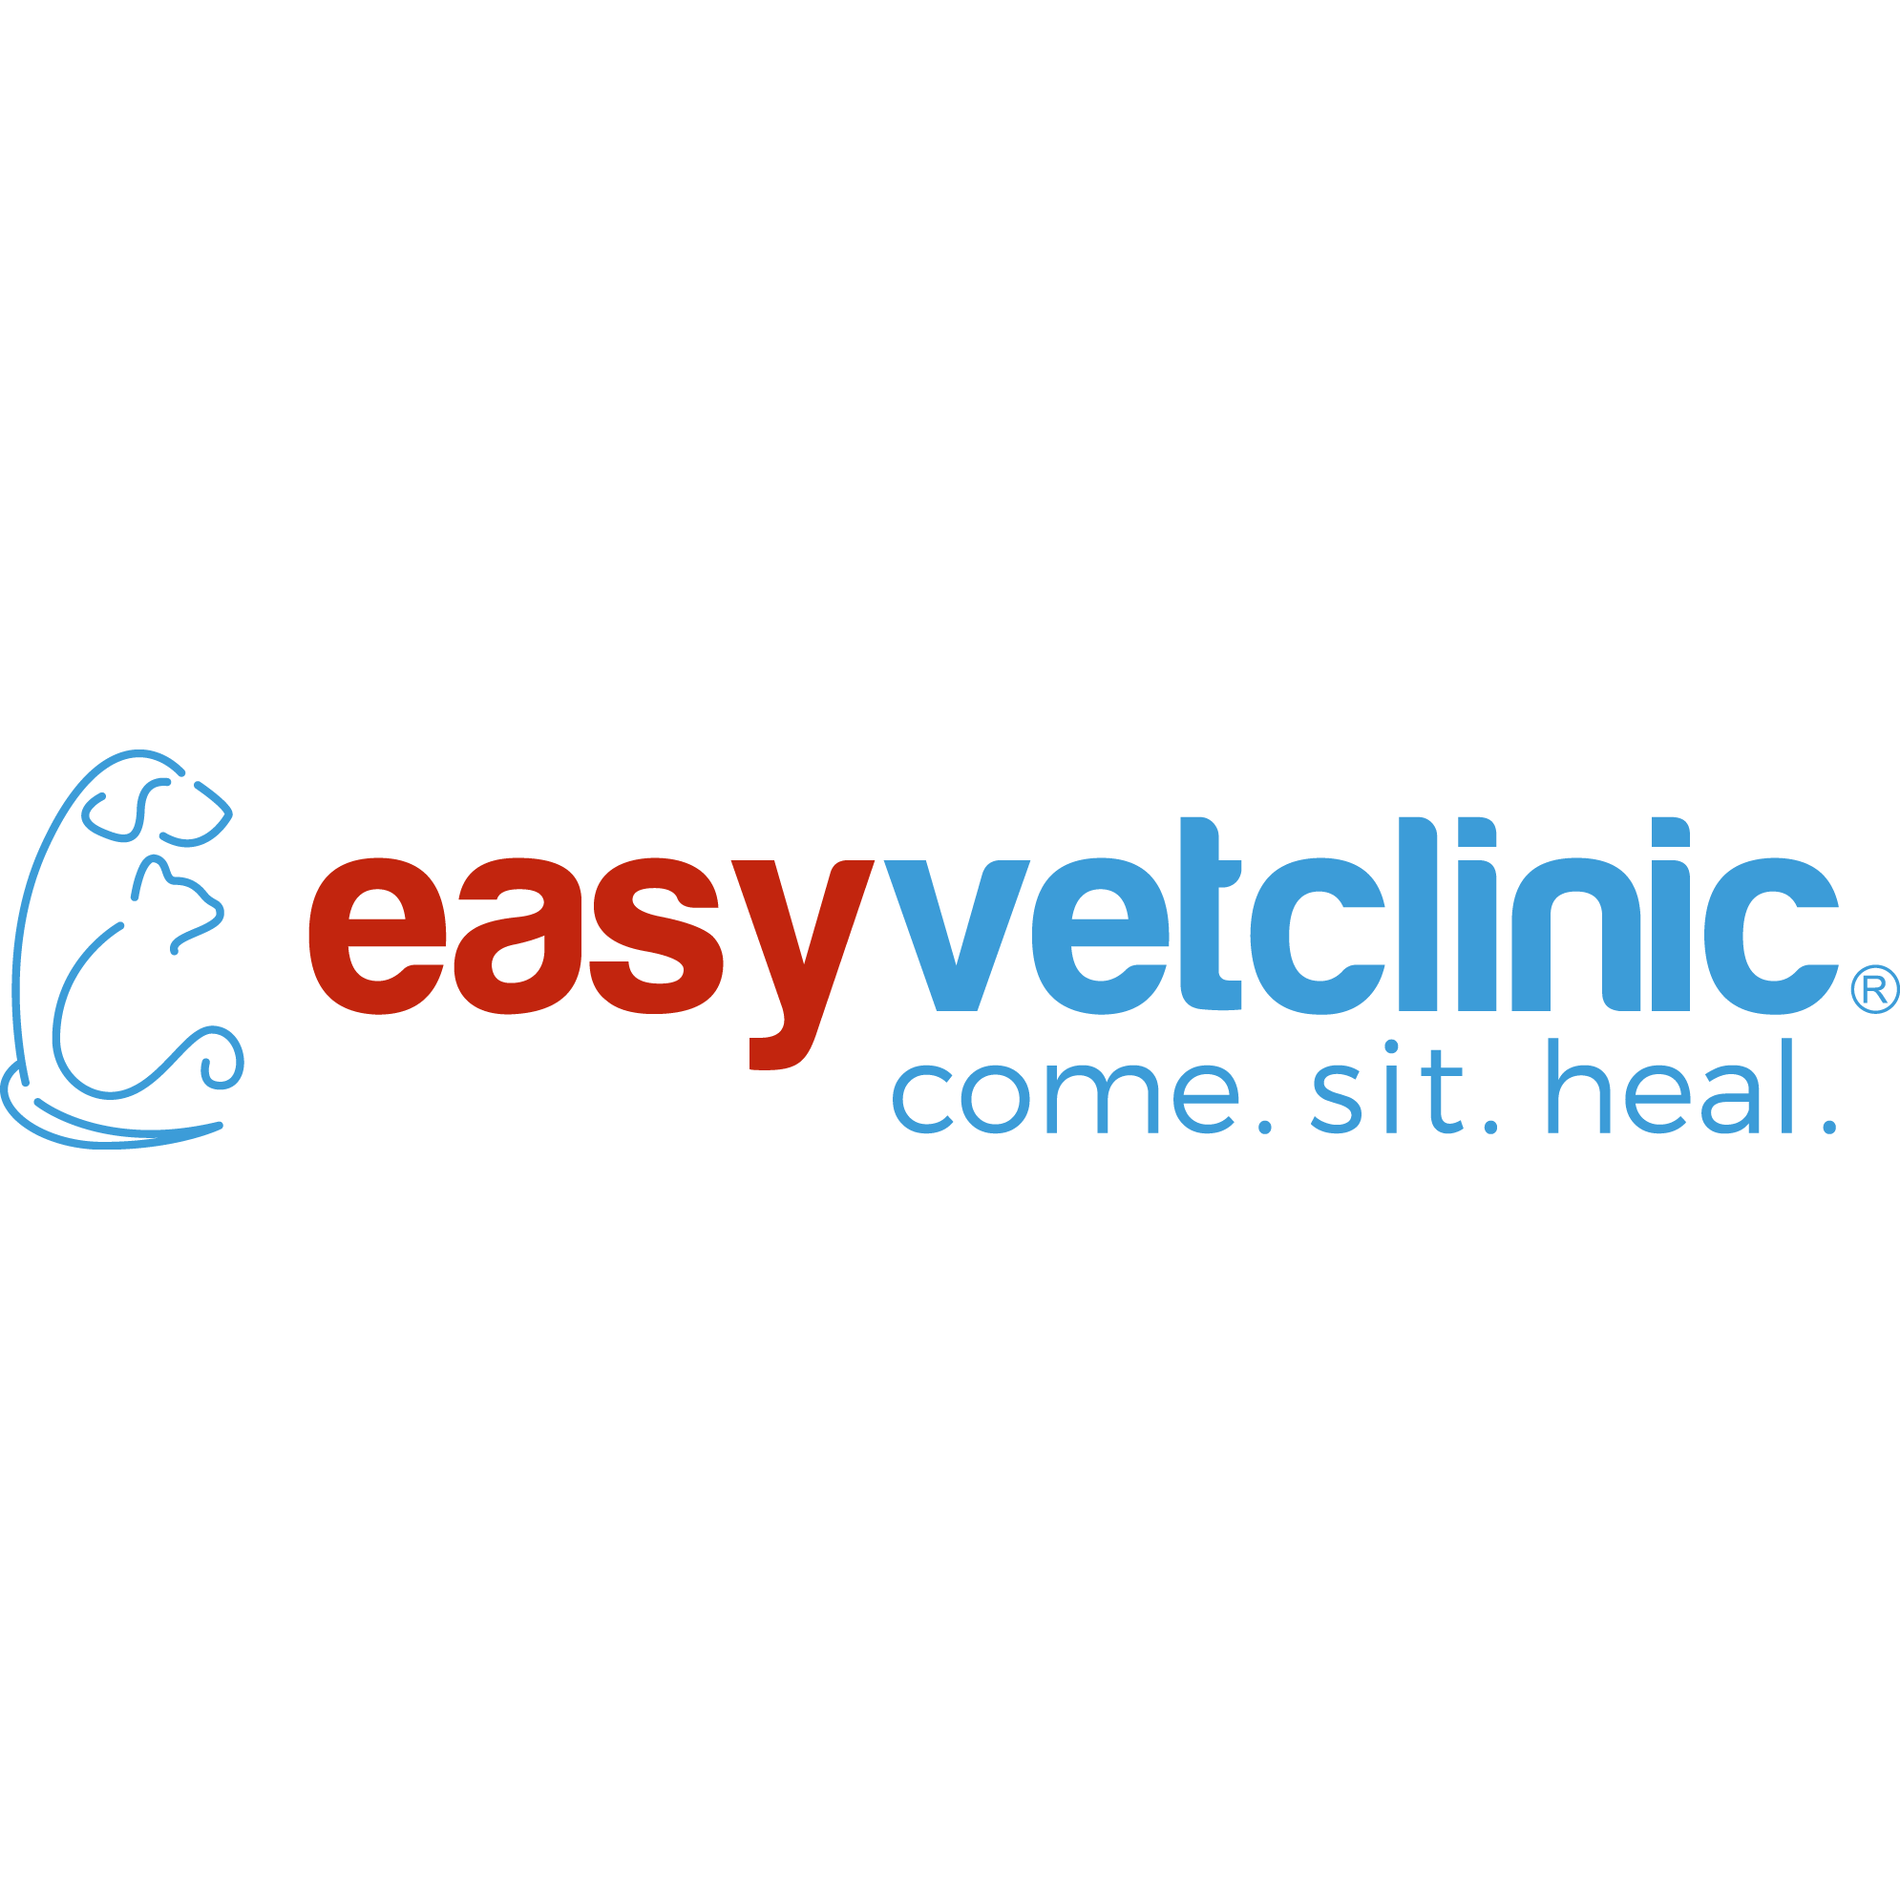 easyvet Walk-In Veterinary Clinic in Alpharetta easyvet Veterinarian Alpharetta Alpharetta (678)252-5604